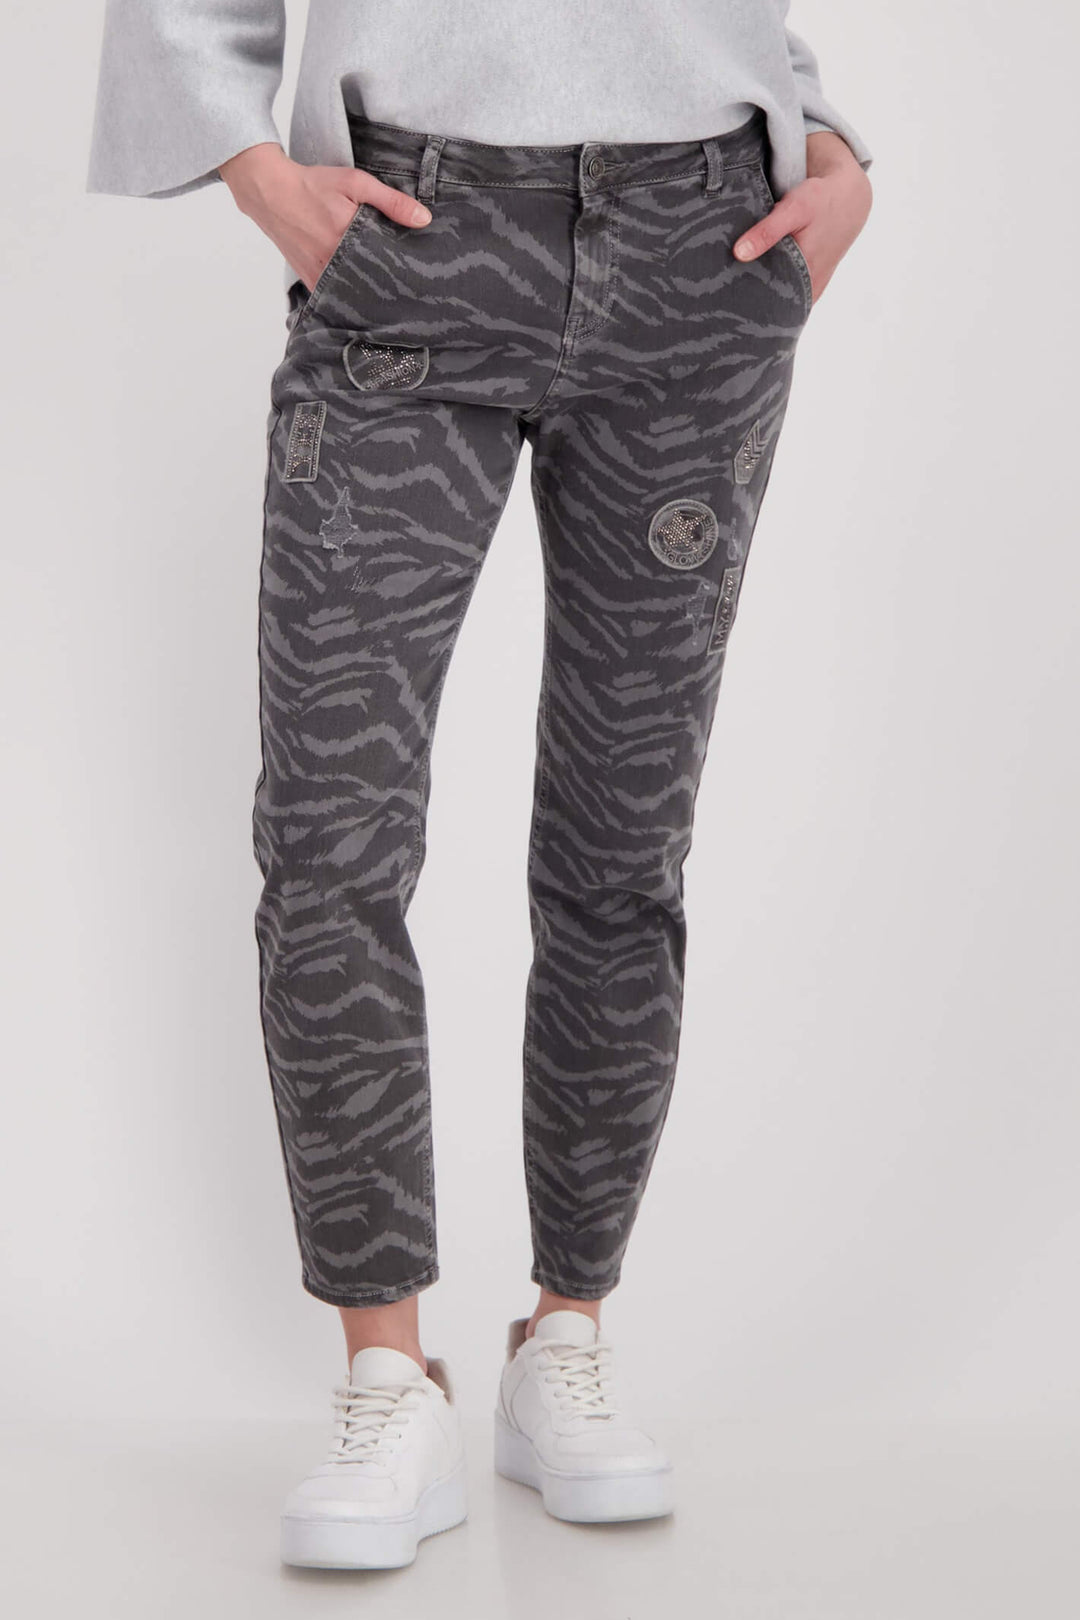 Monari 807144 998 Grey Animal Print Slim Fit Jeans - Experience Boutique